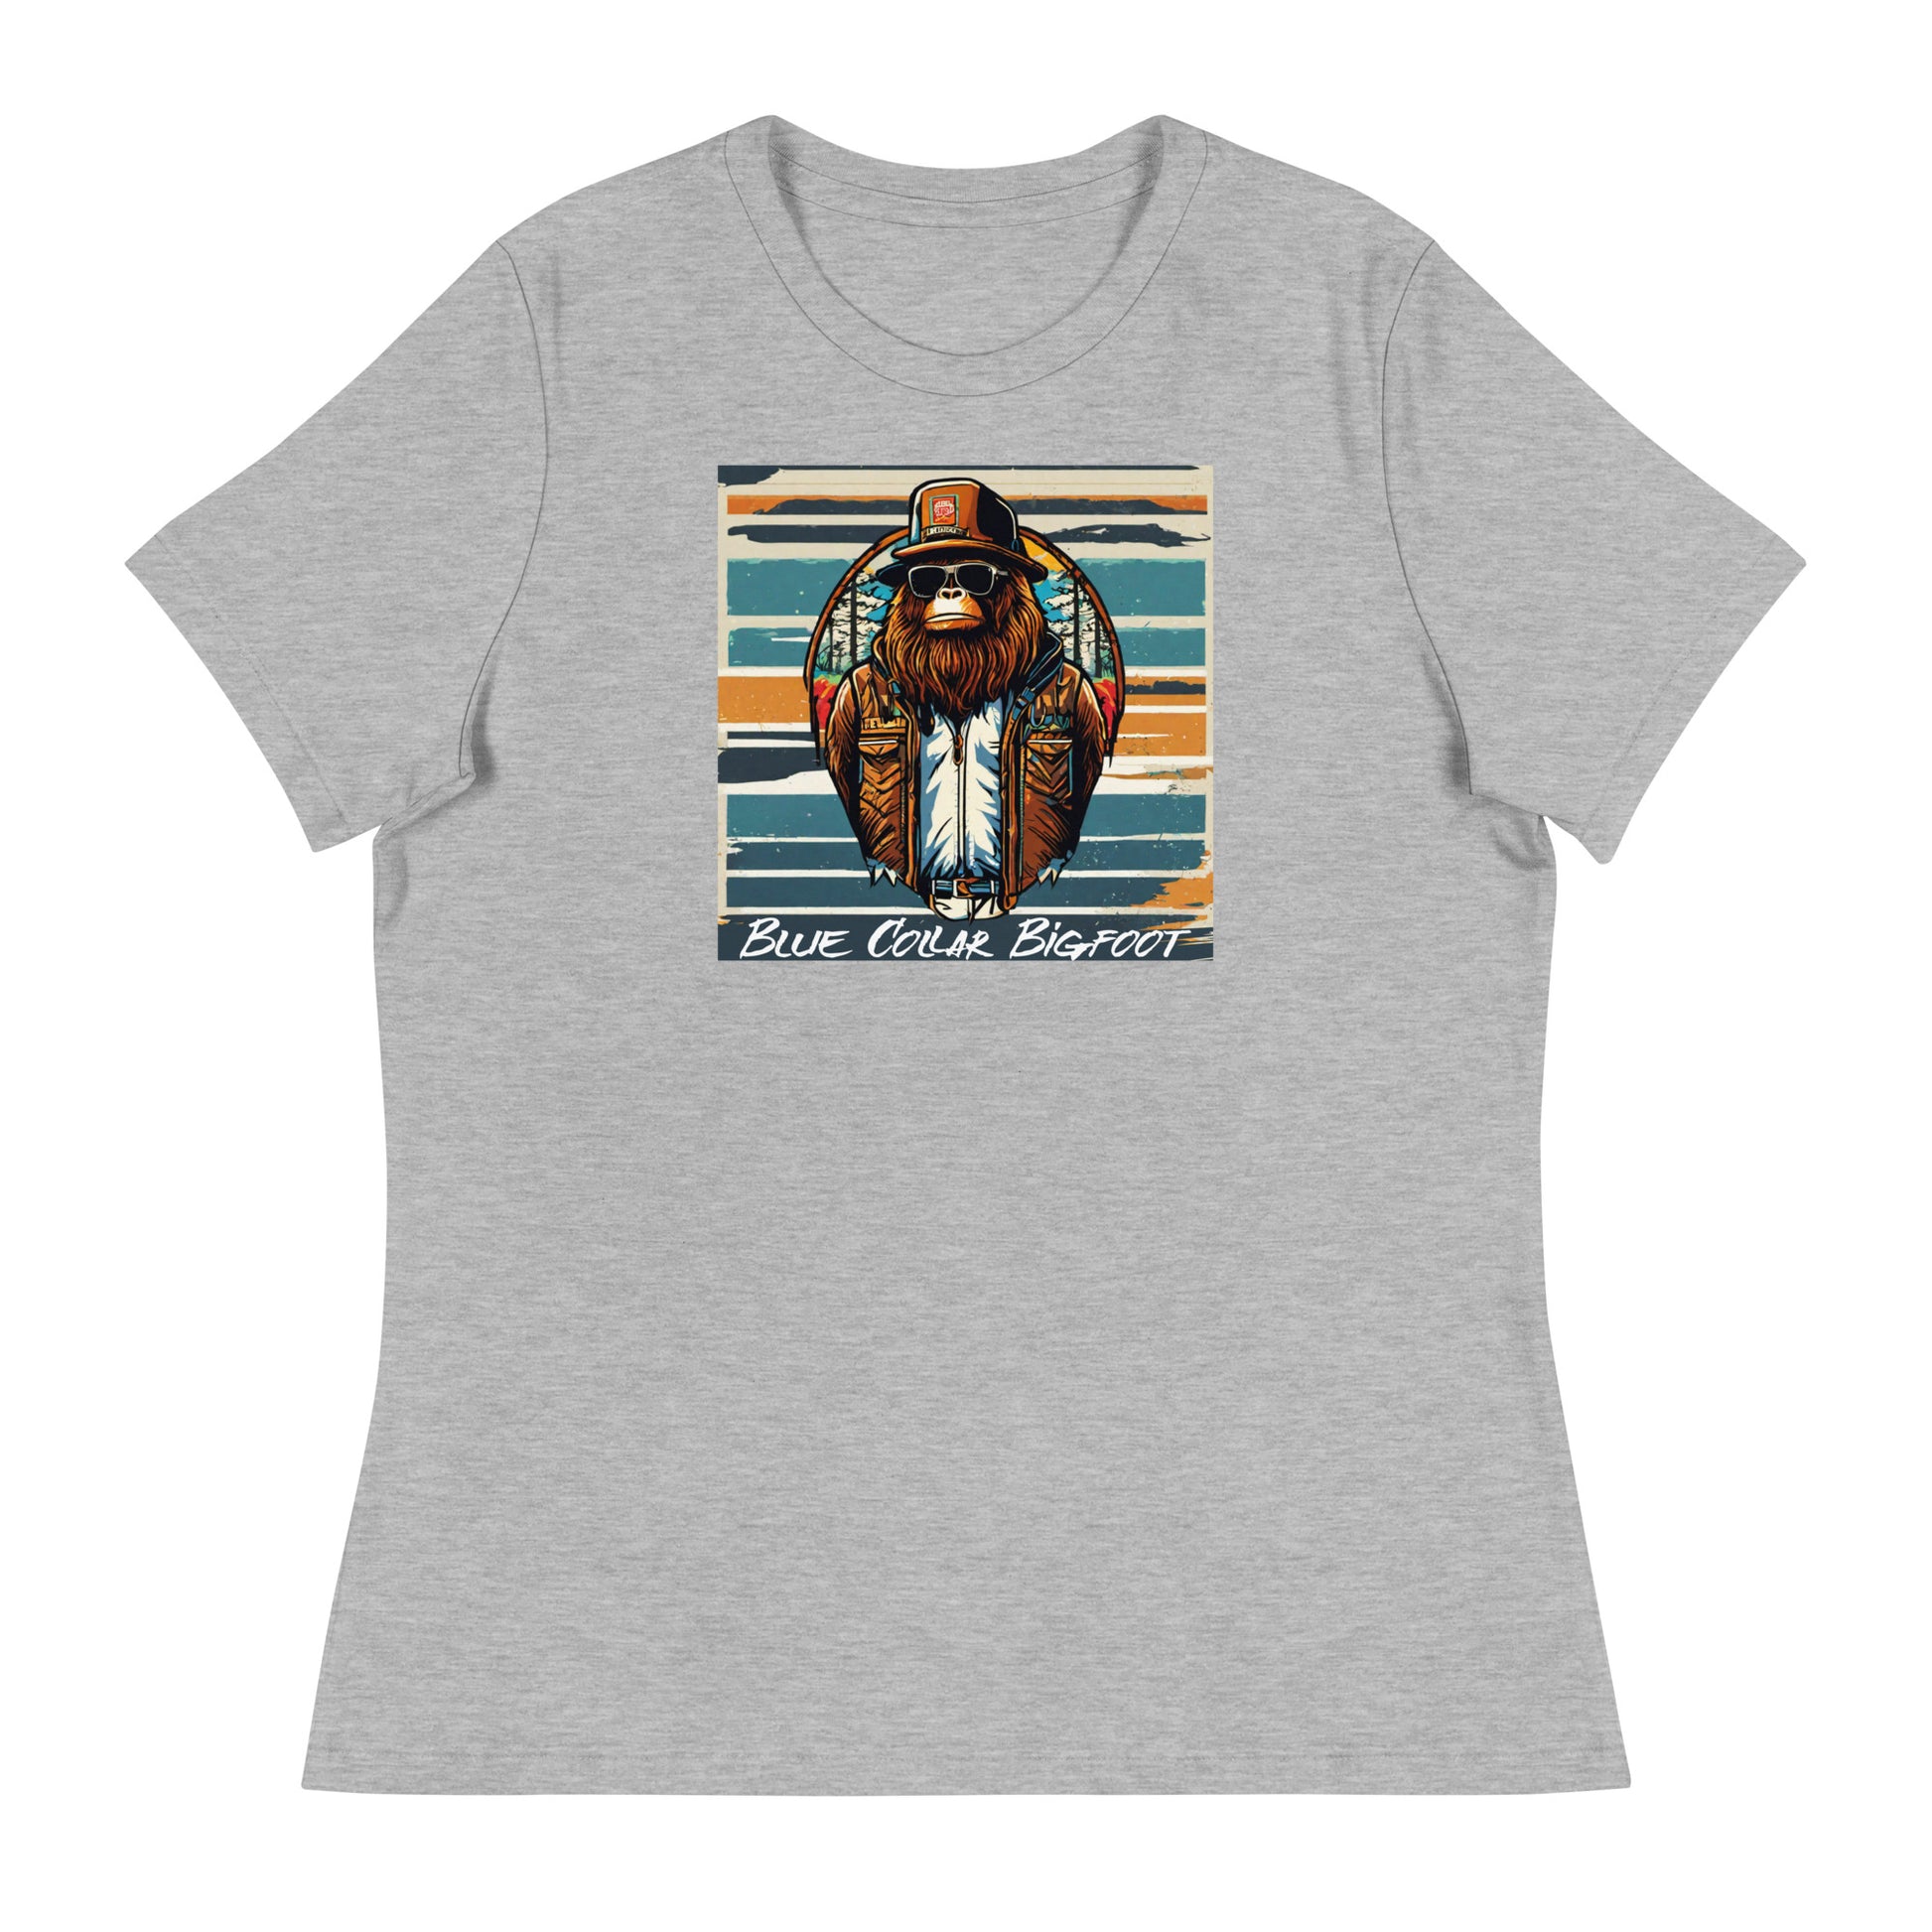 Blue-Collar Bigfoot Women's Graphic T-Shirt Athletic Heather